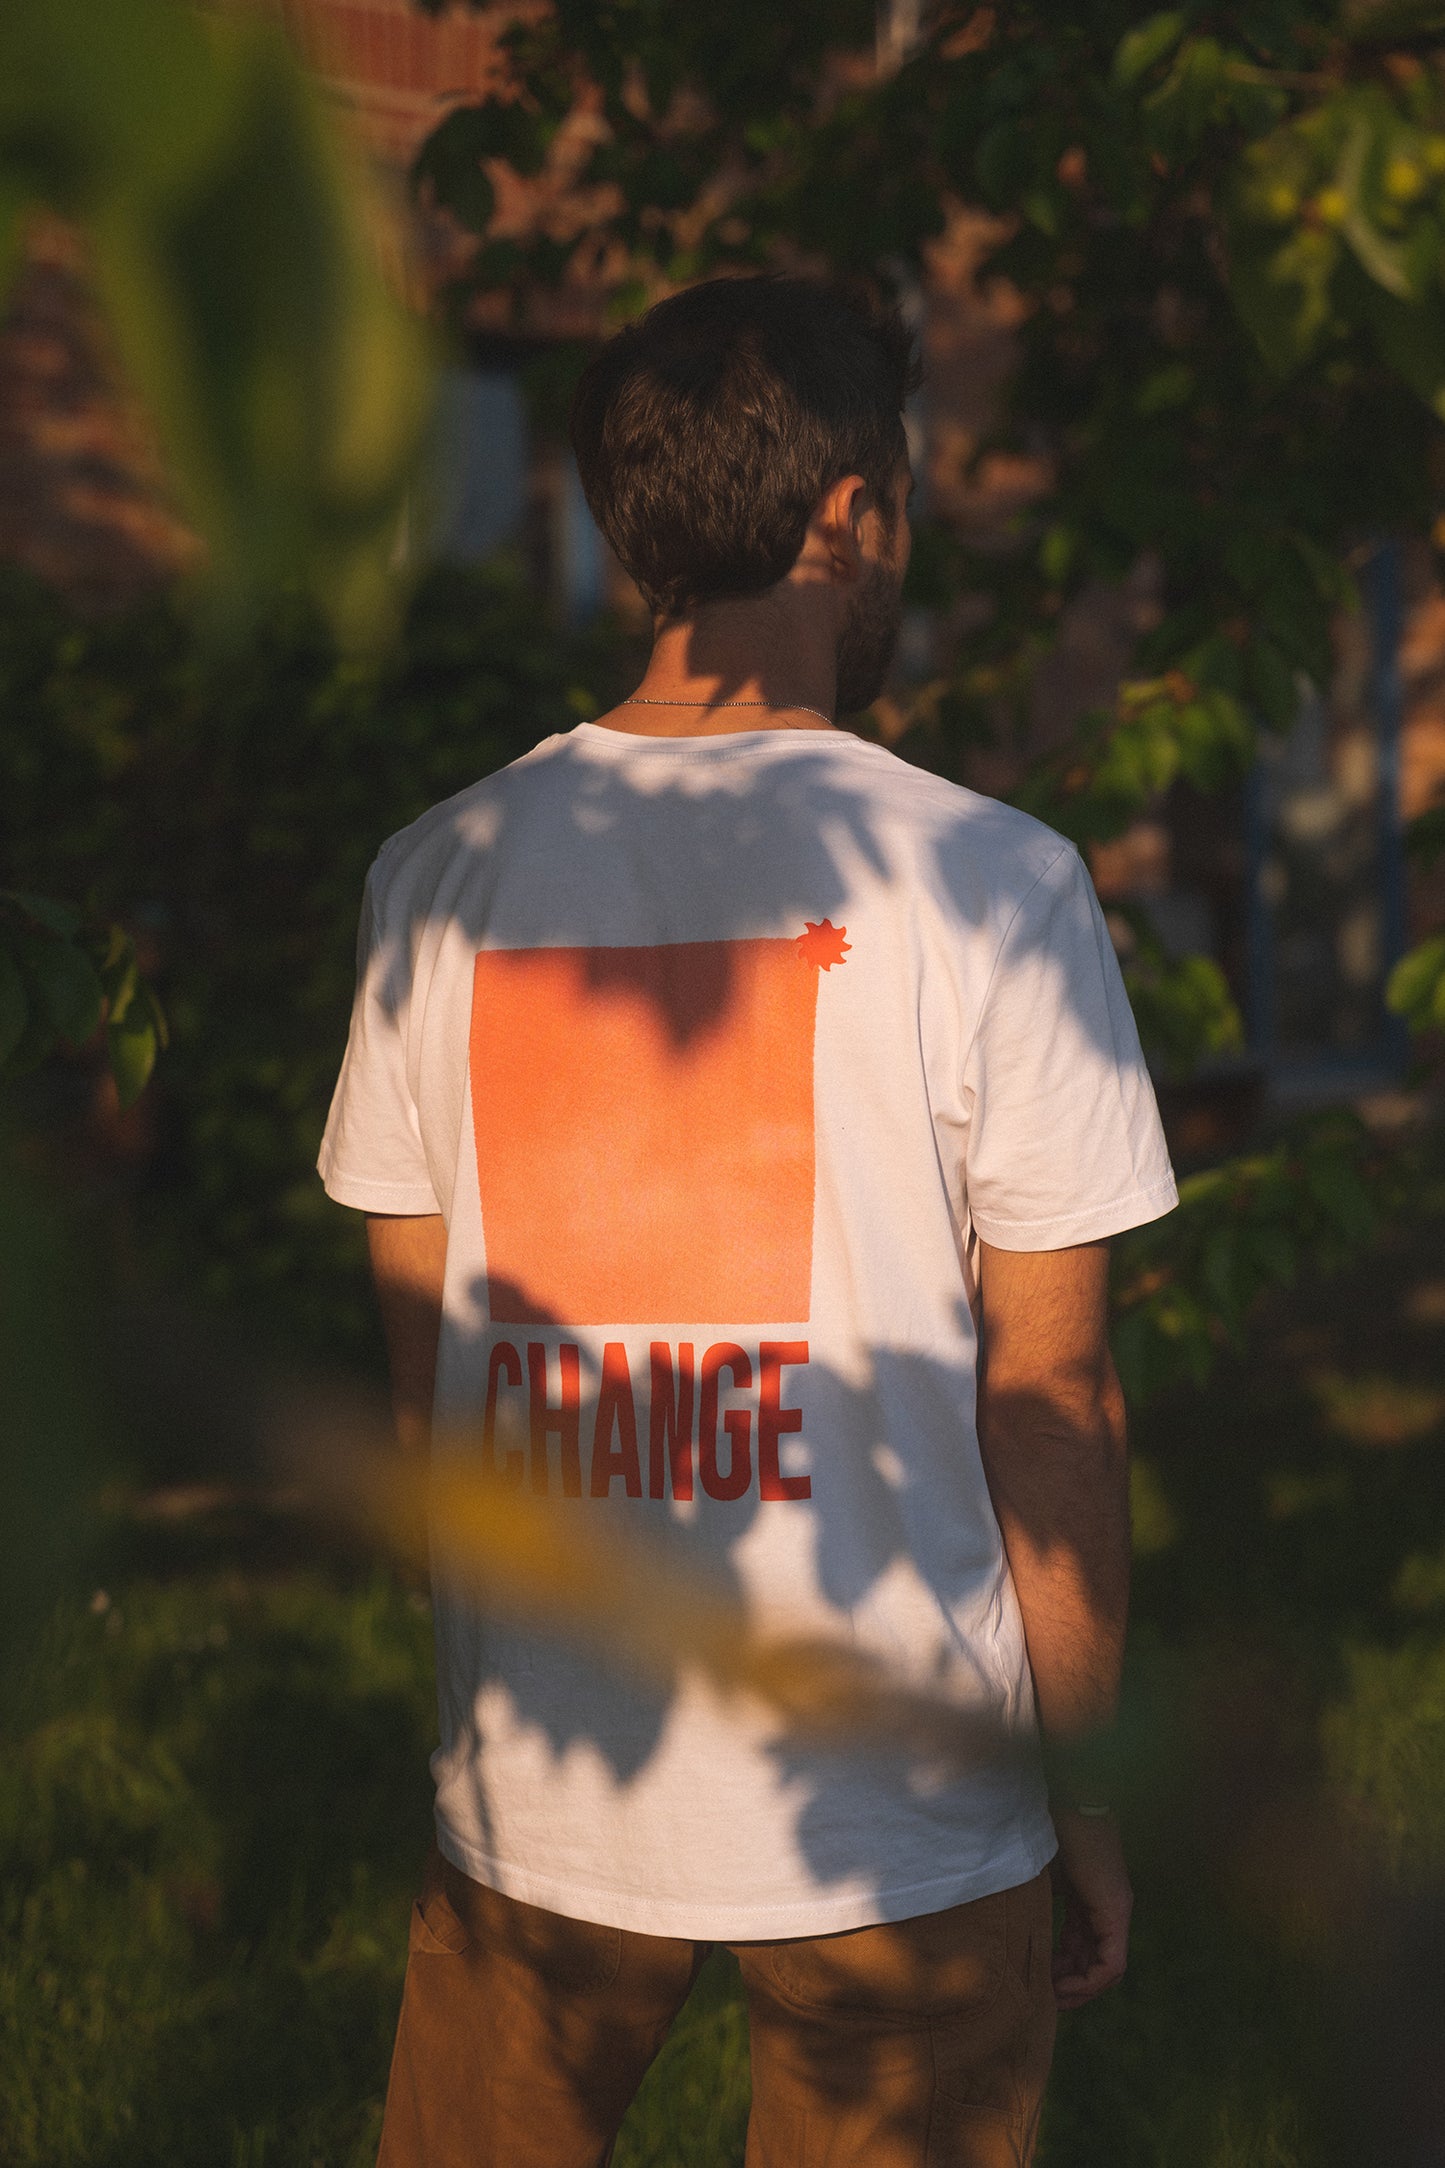 Shirt "Change"